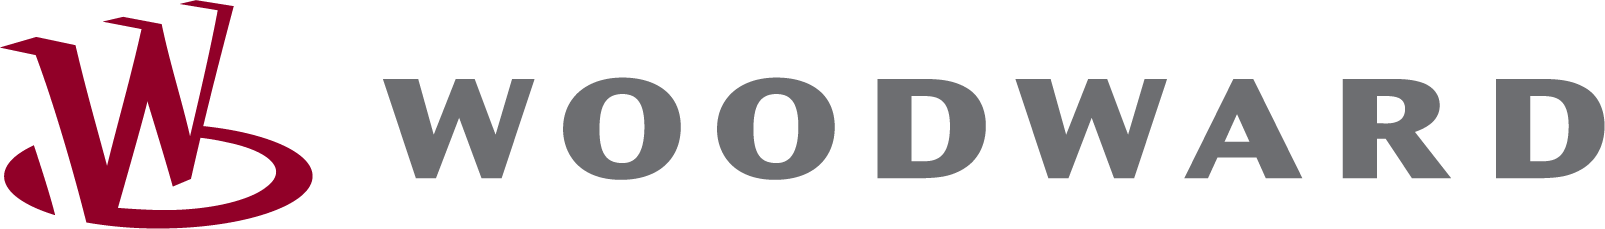 Woodward Logo png